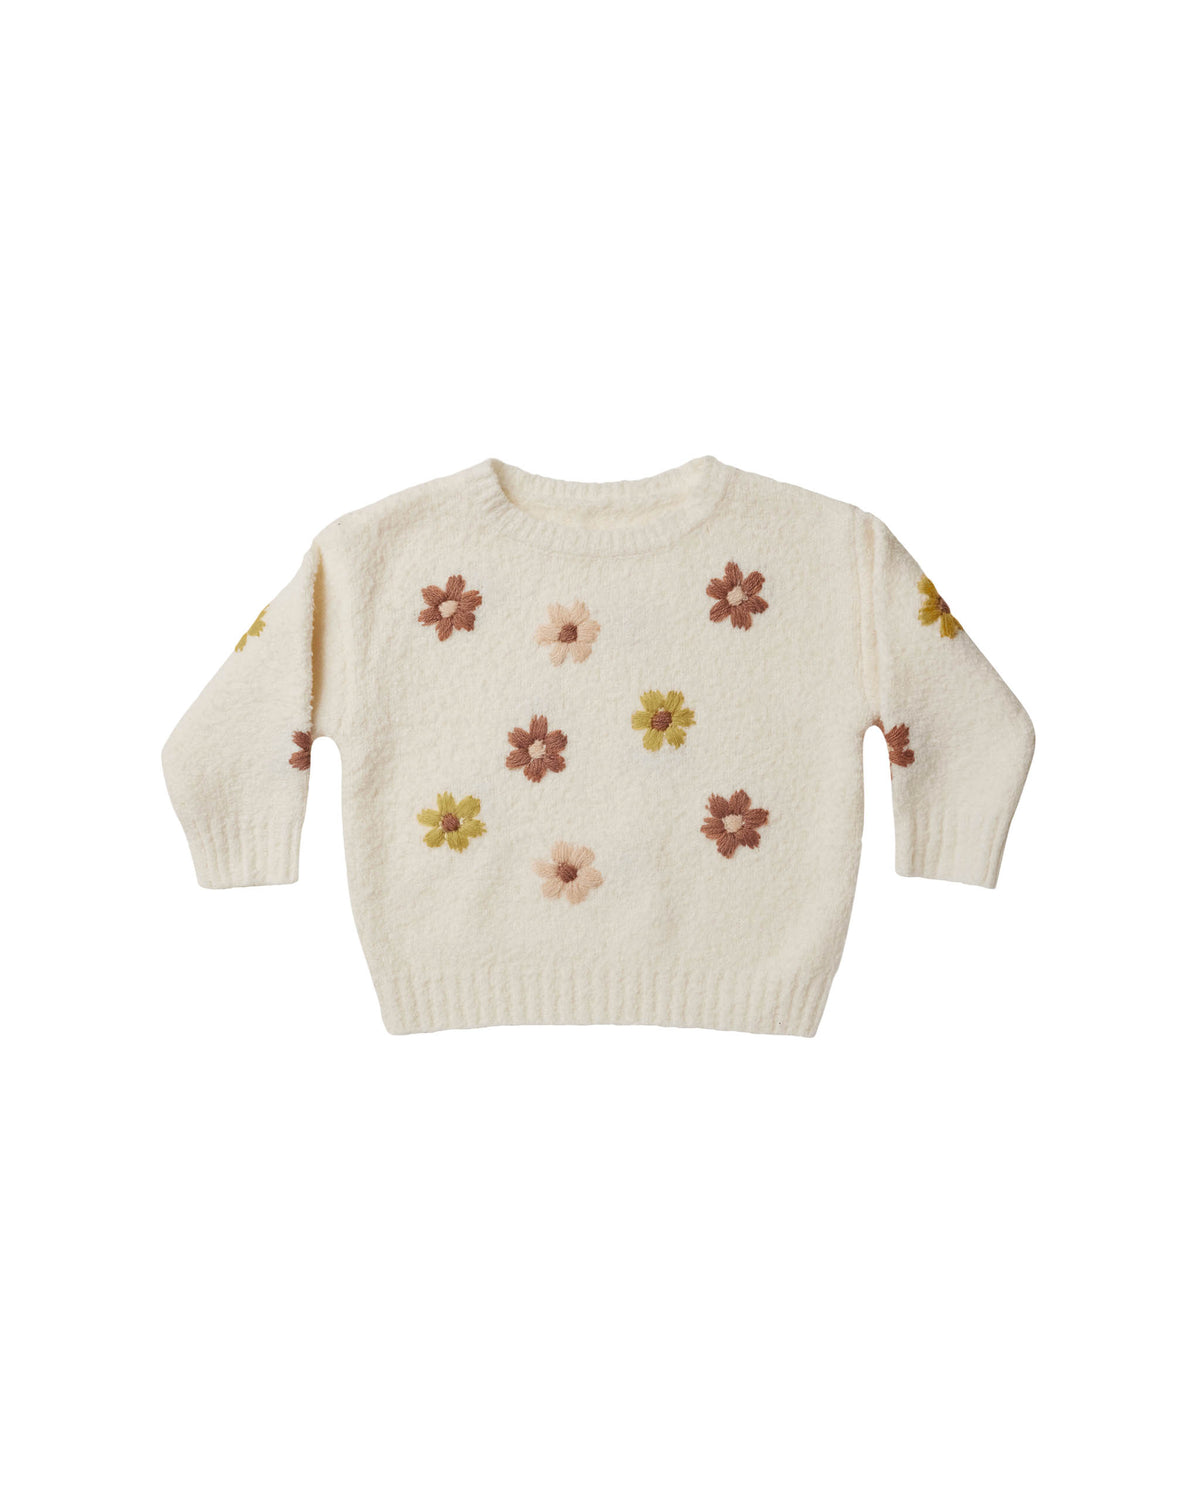 Rylee & Cru cassidy sweater || flowers